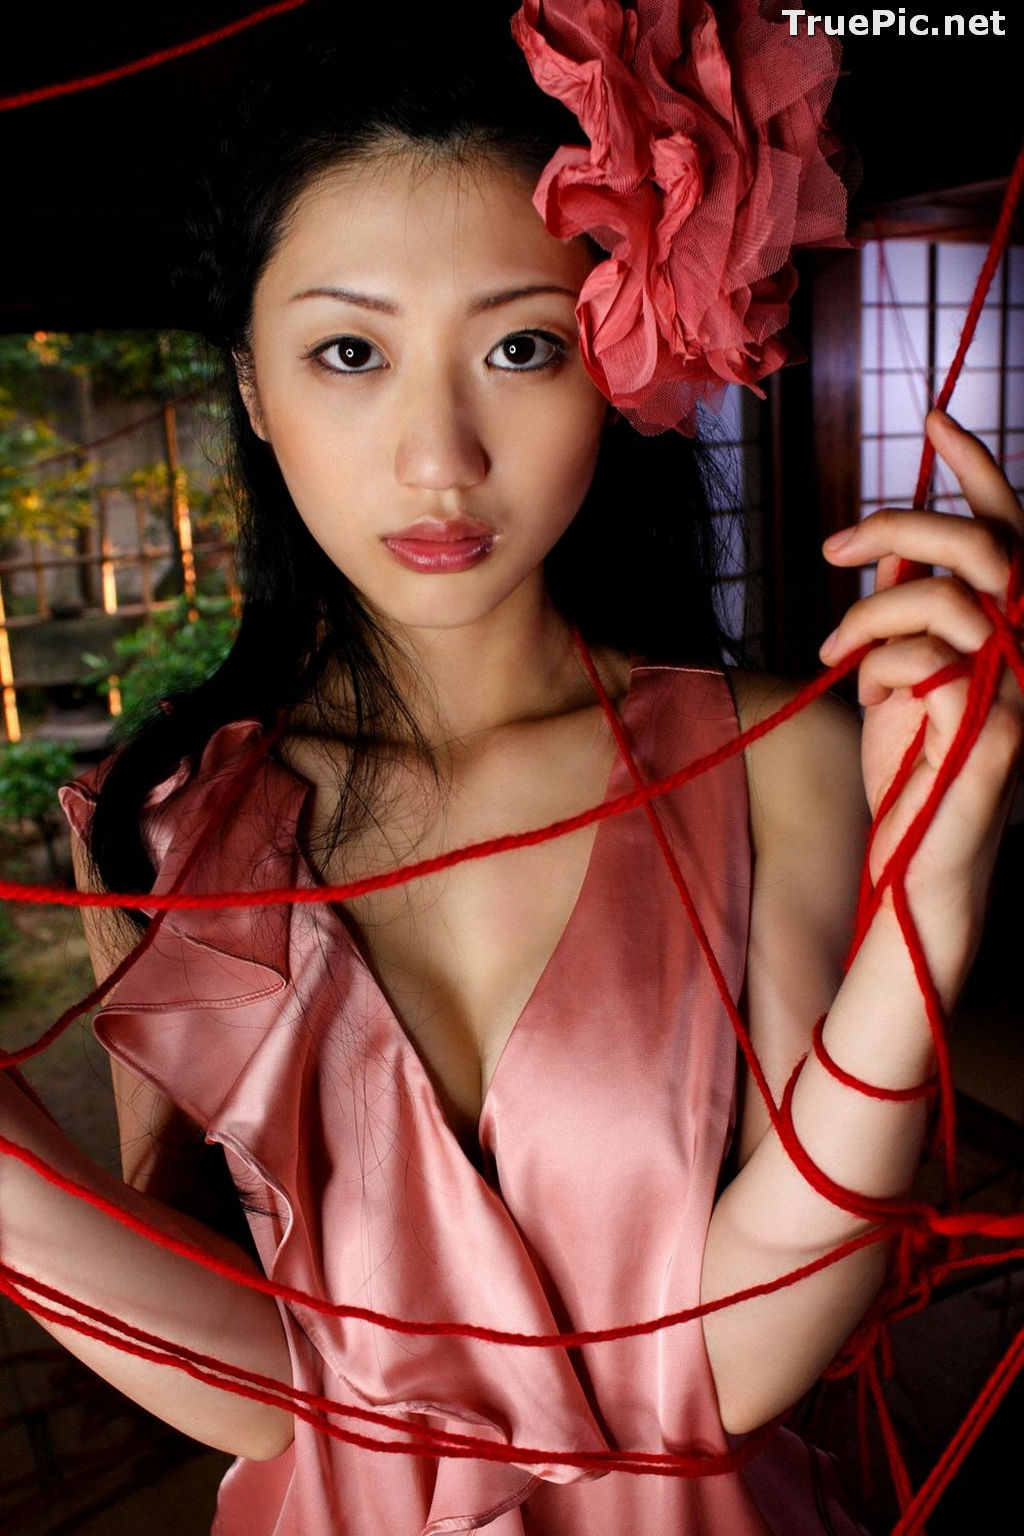 Image [YS Web] Vol.525 - Japanese Actress and Gravure Idol - Mitsu Dan - TruePic.net - Picture-78